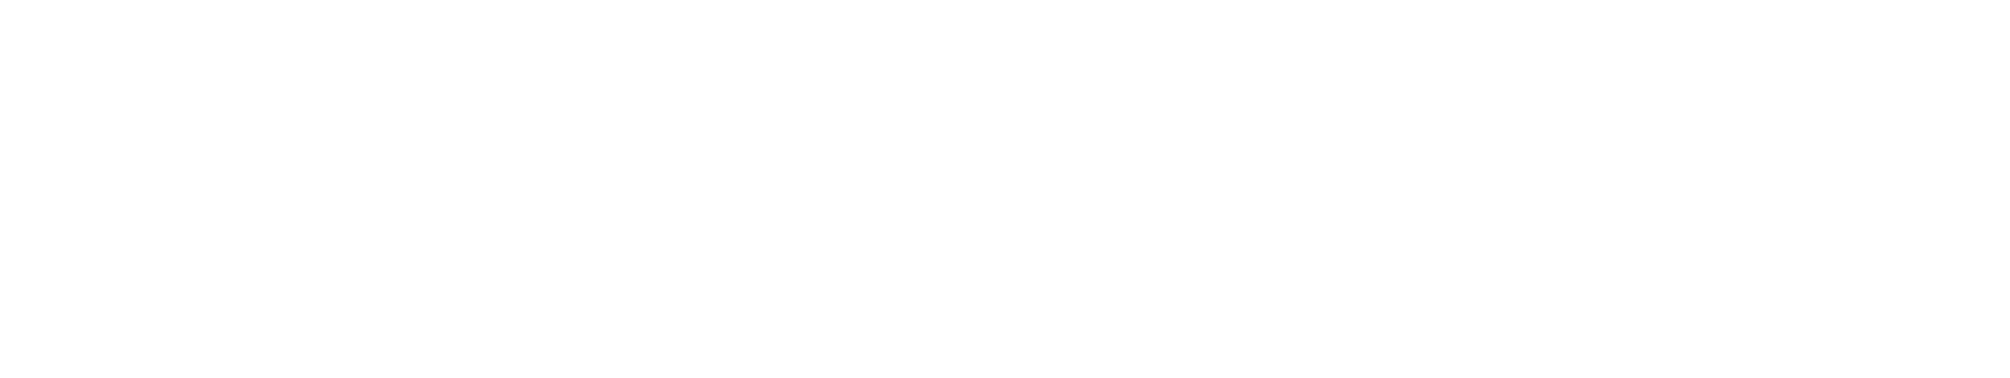 『One AK』で世界に誇るモノづくりを